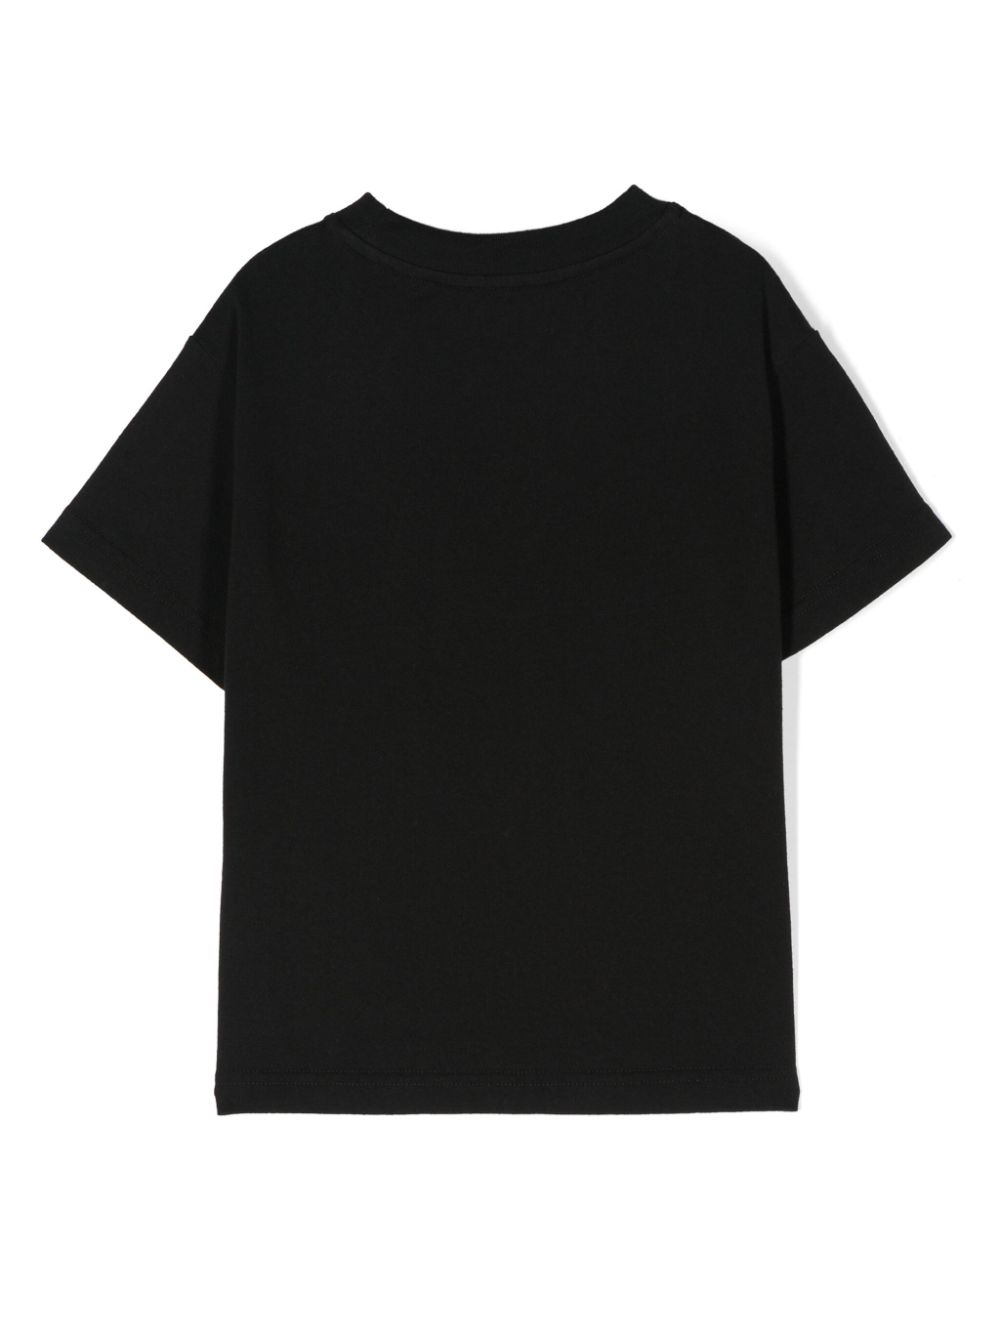 Black cotton jersey boy PALM ANGELS t-shirt